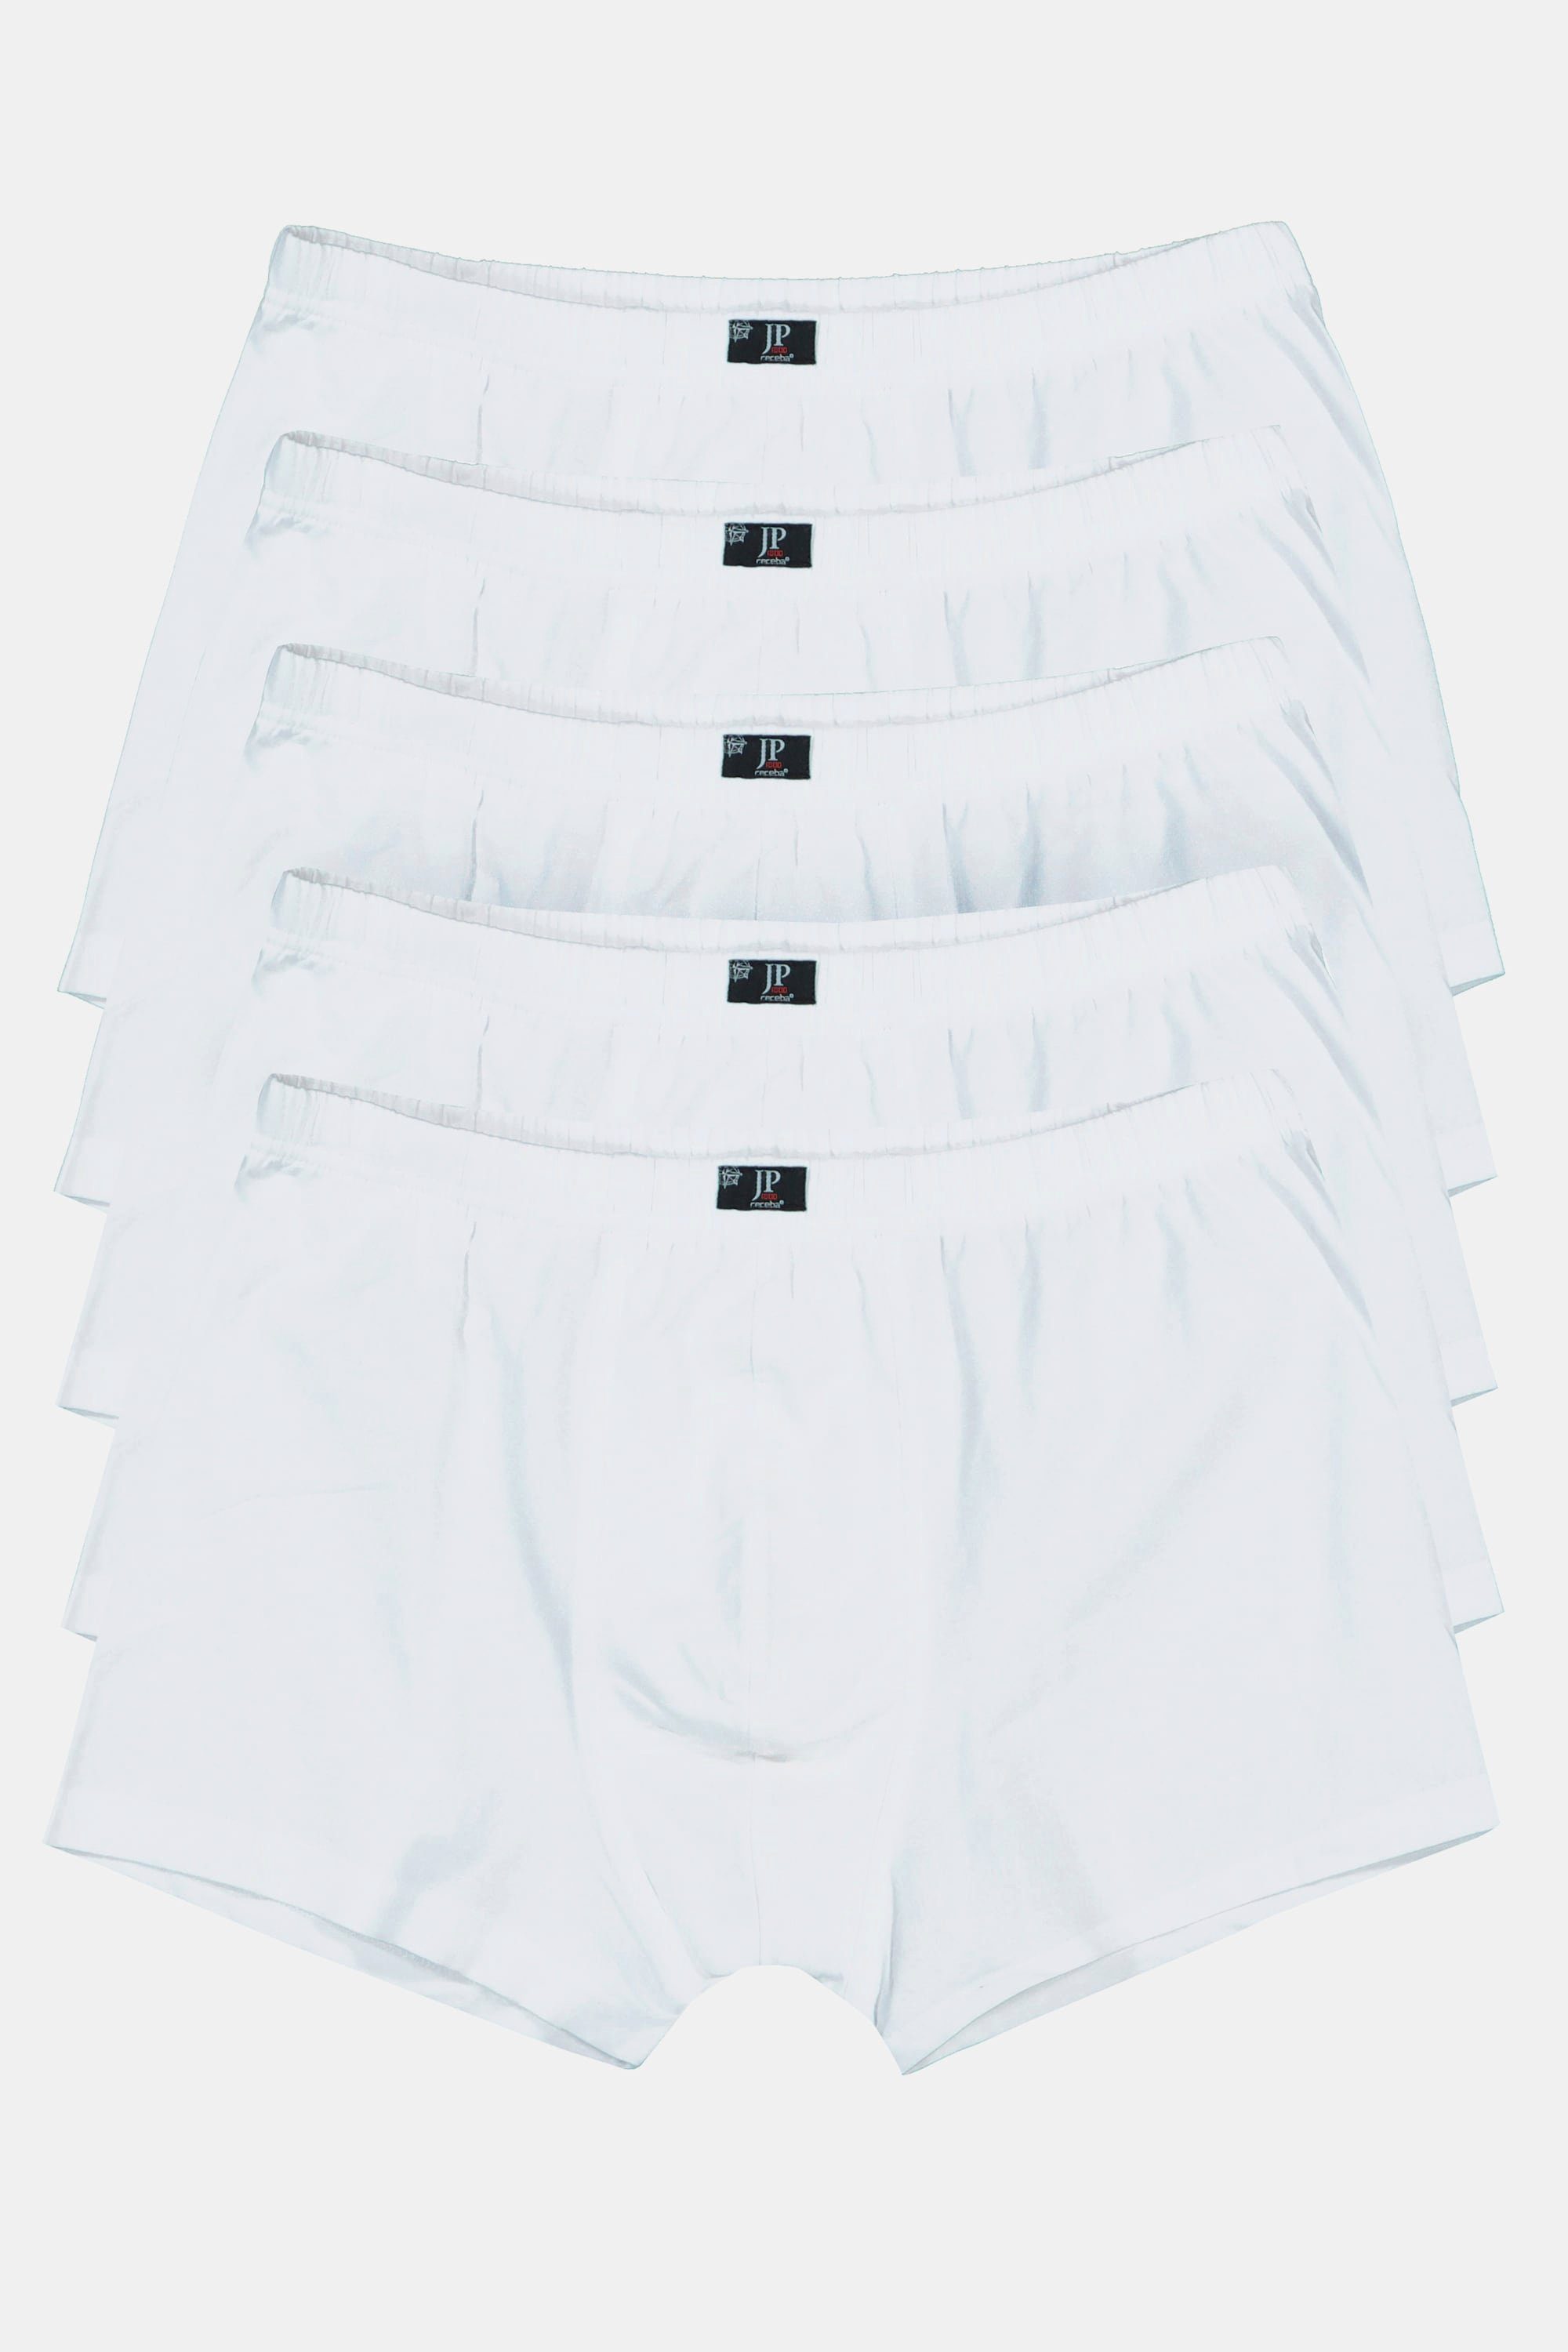 7XL bis Farbe Slip Pants schneeweiß (5-St) 1 Gr. 5er-Pack Unterhose JP1880